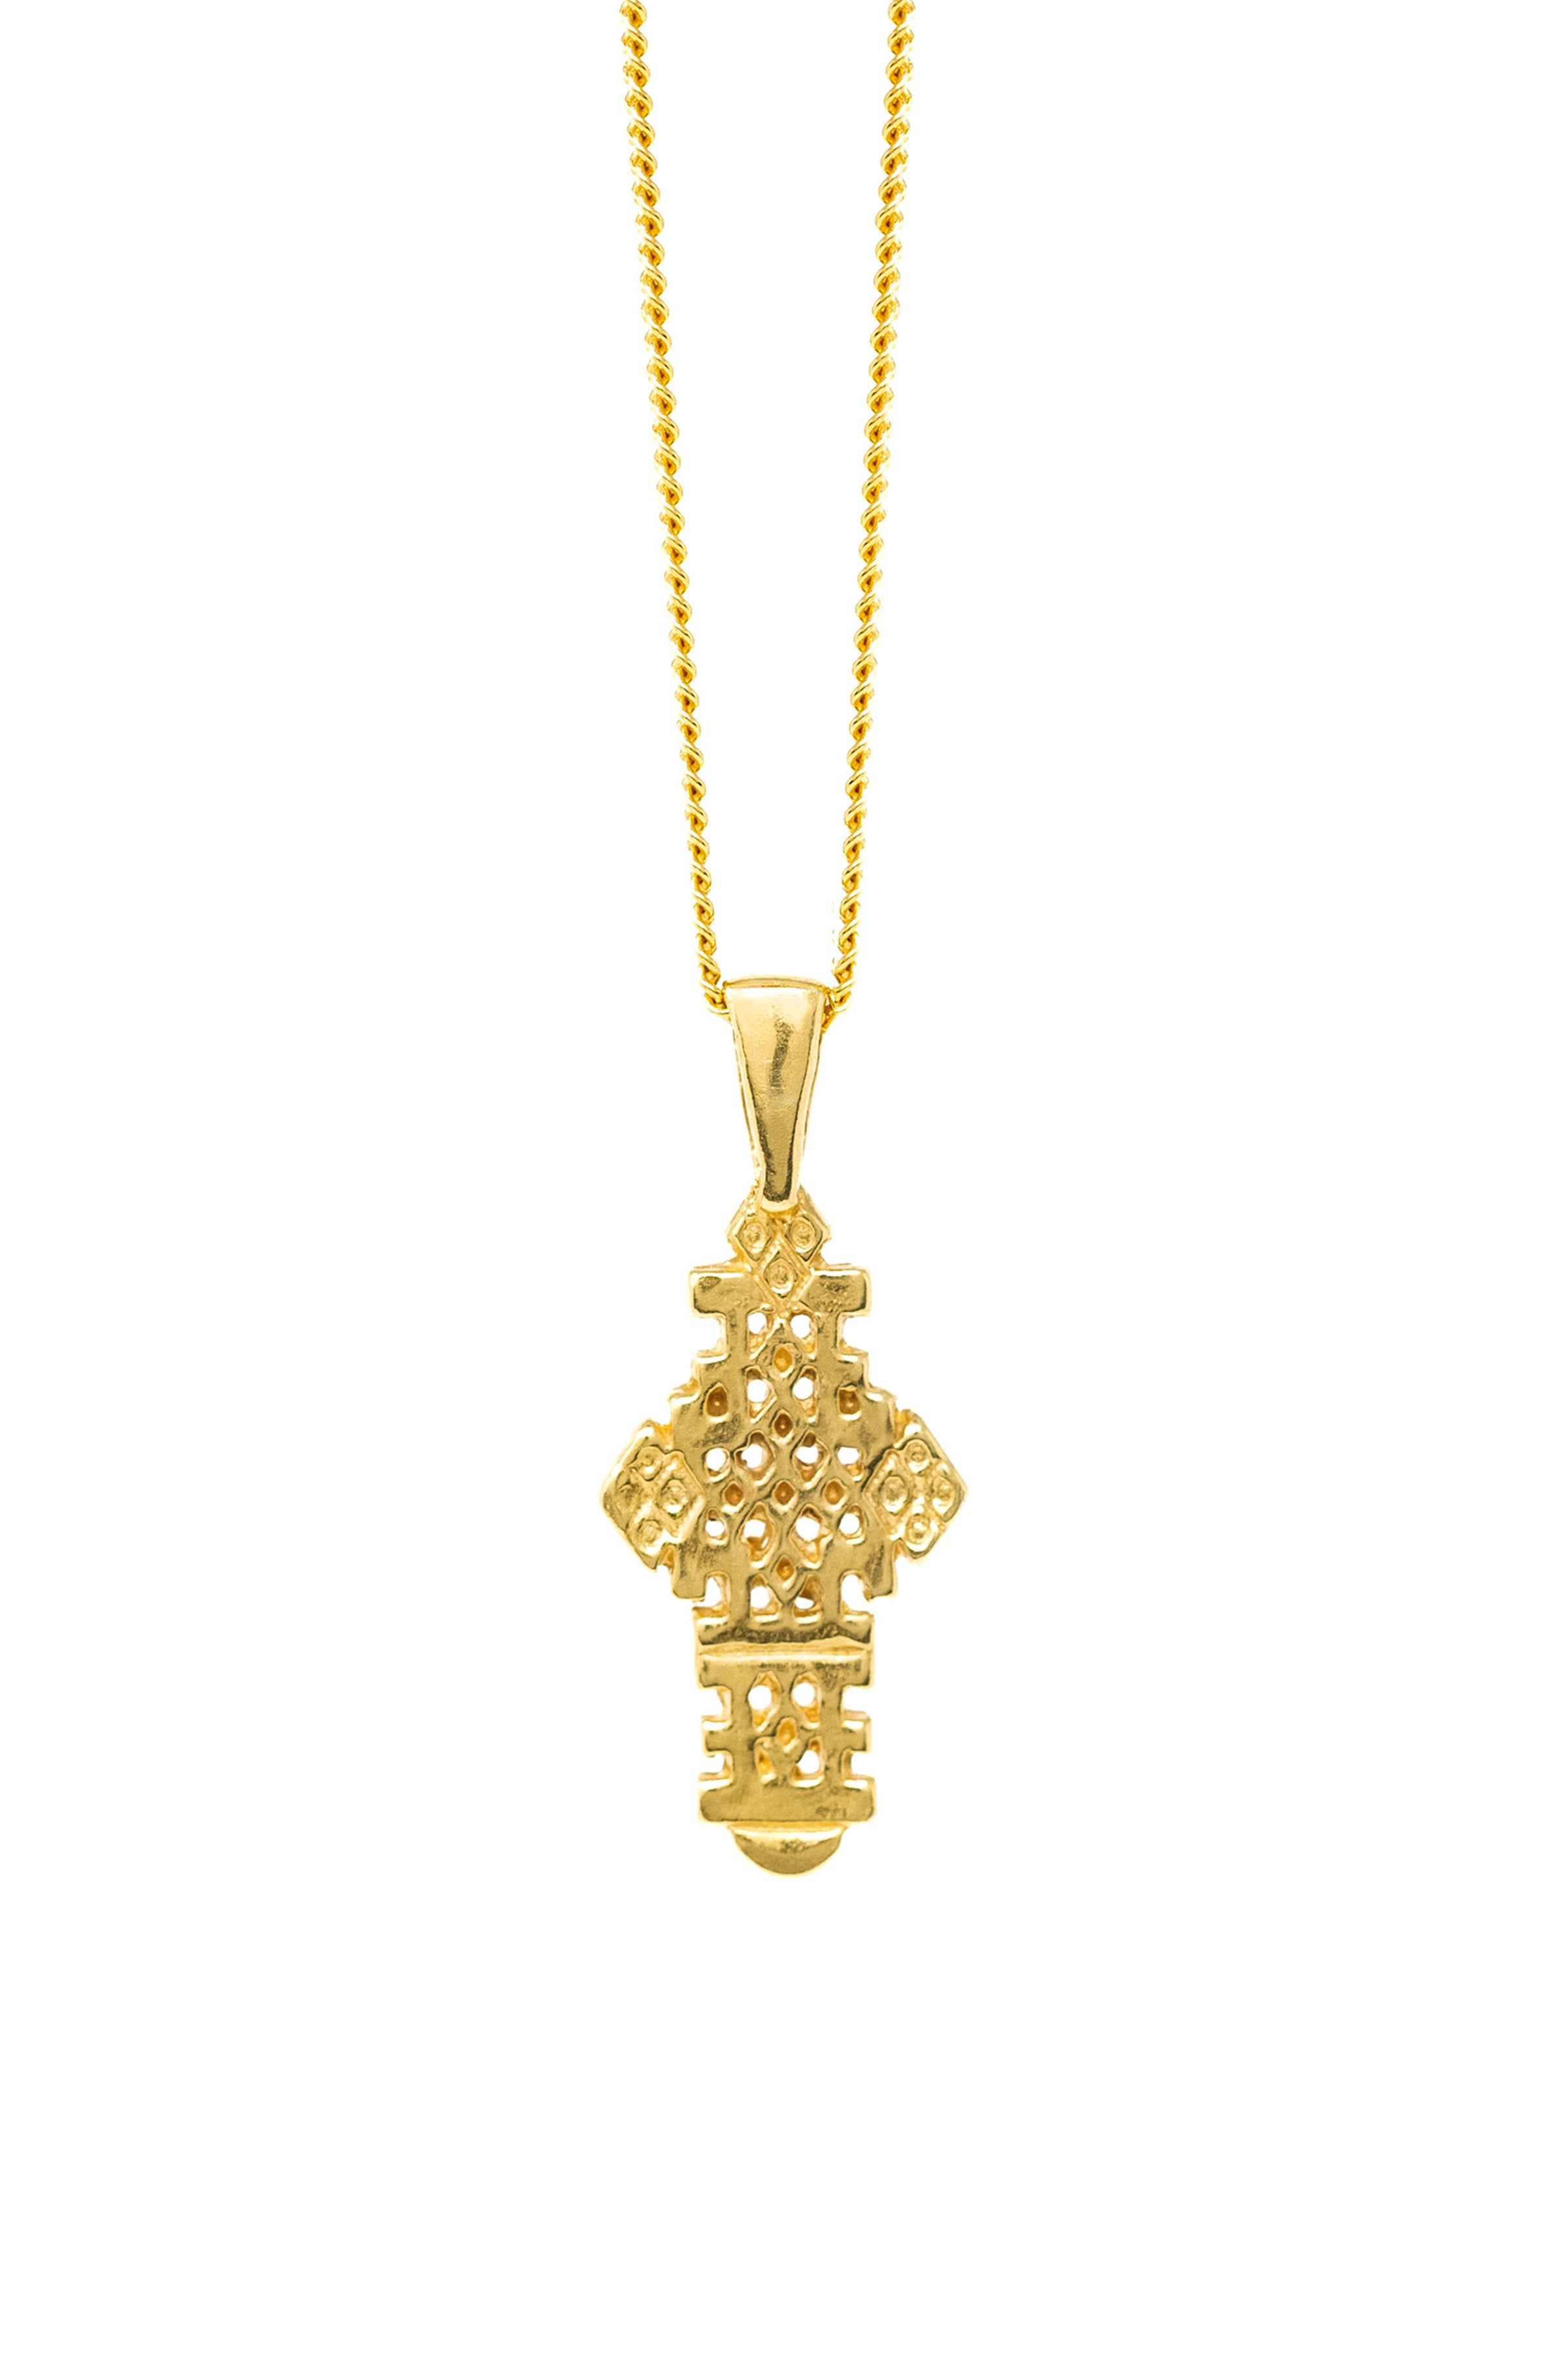 Vintage Coptic cross w/ stone necklace - Centered, Inc.